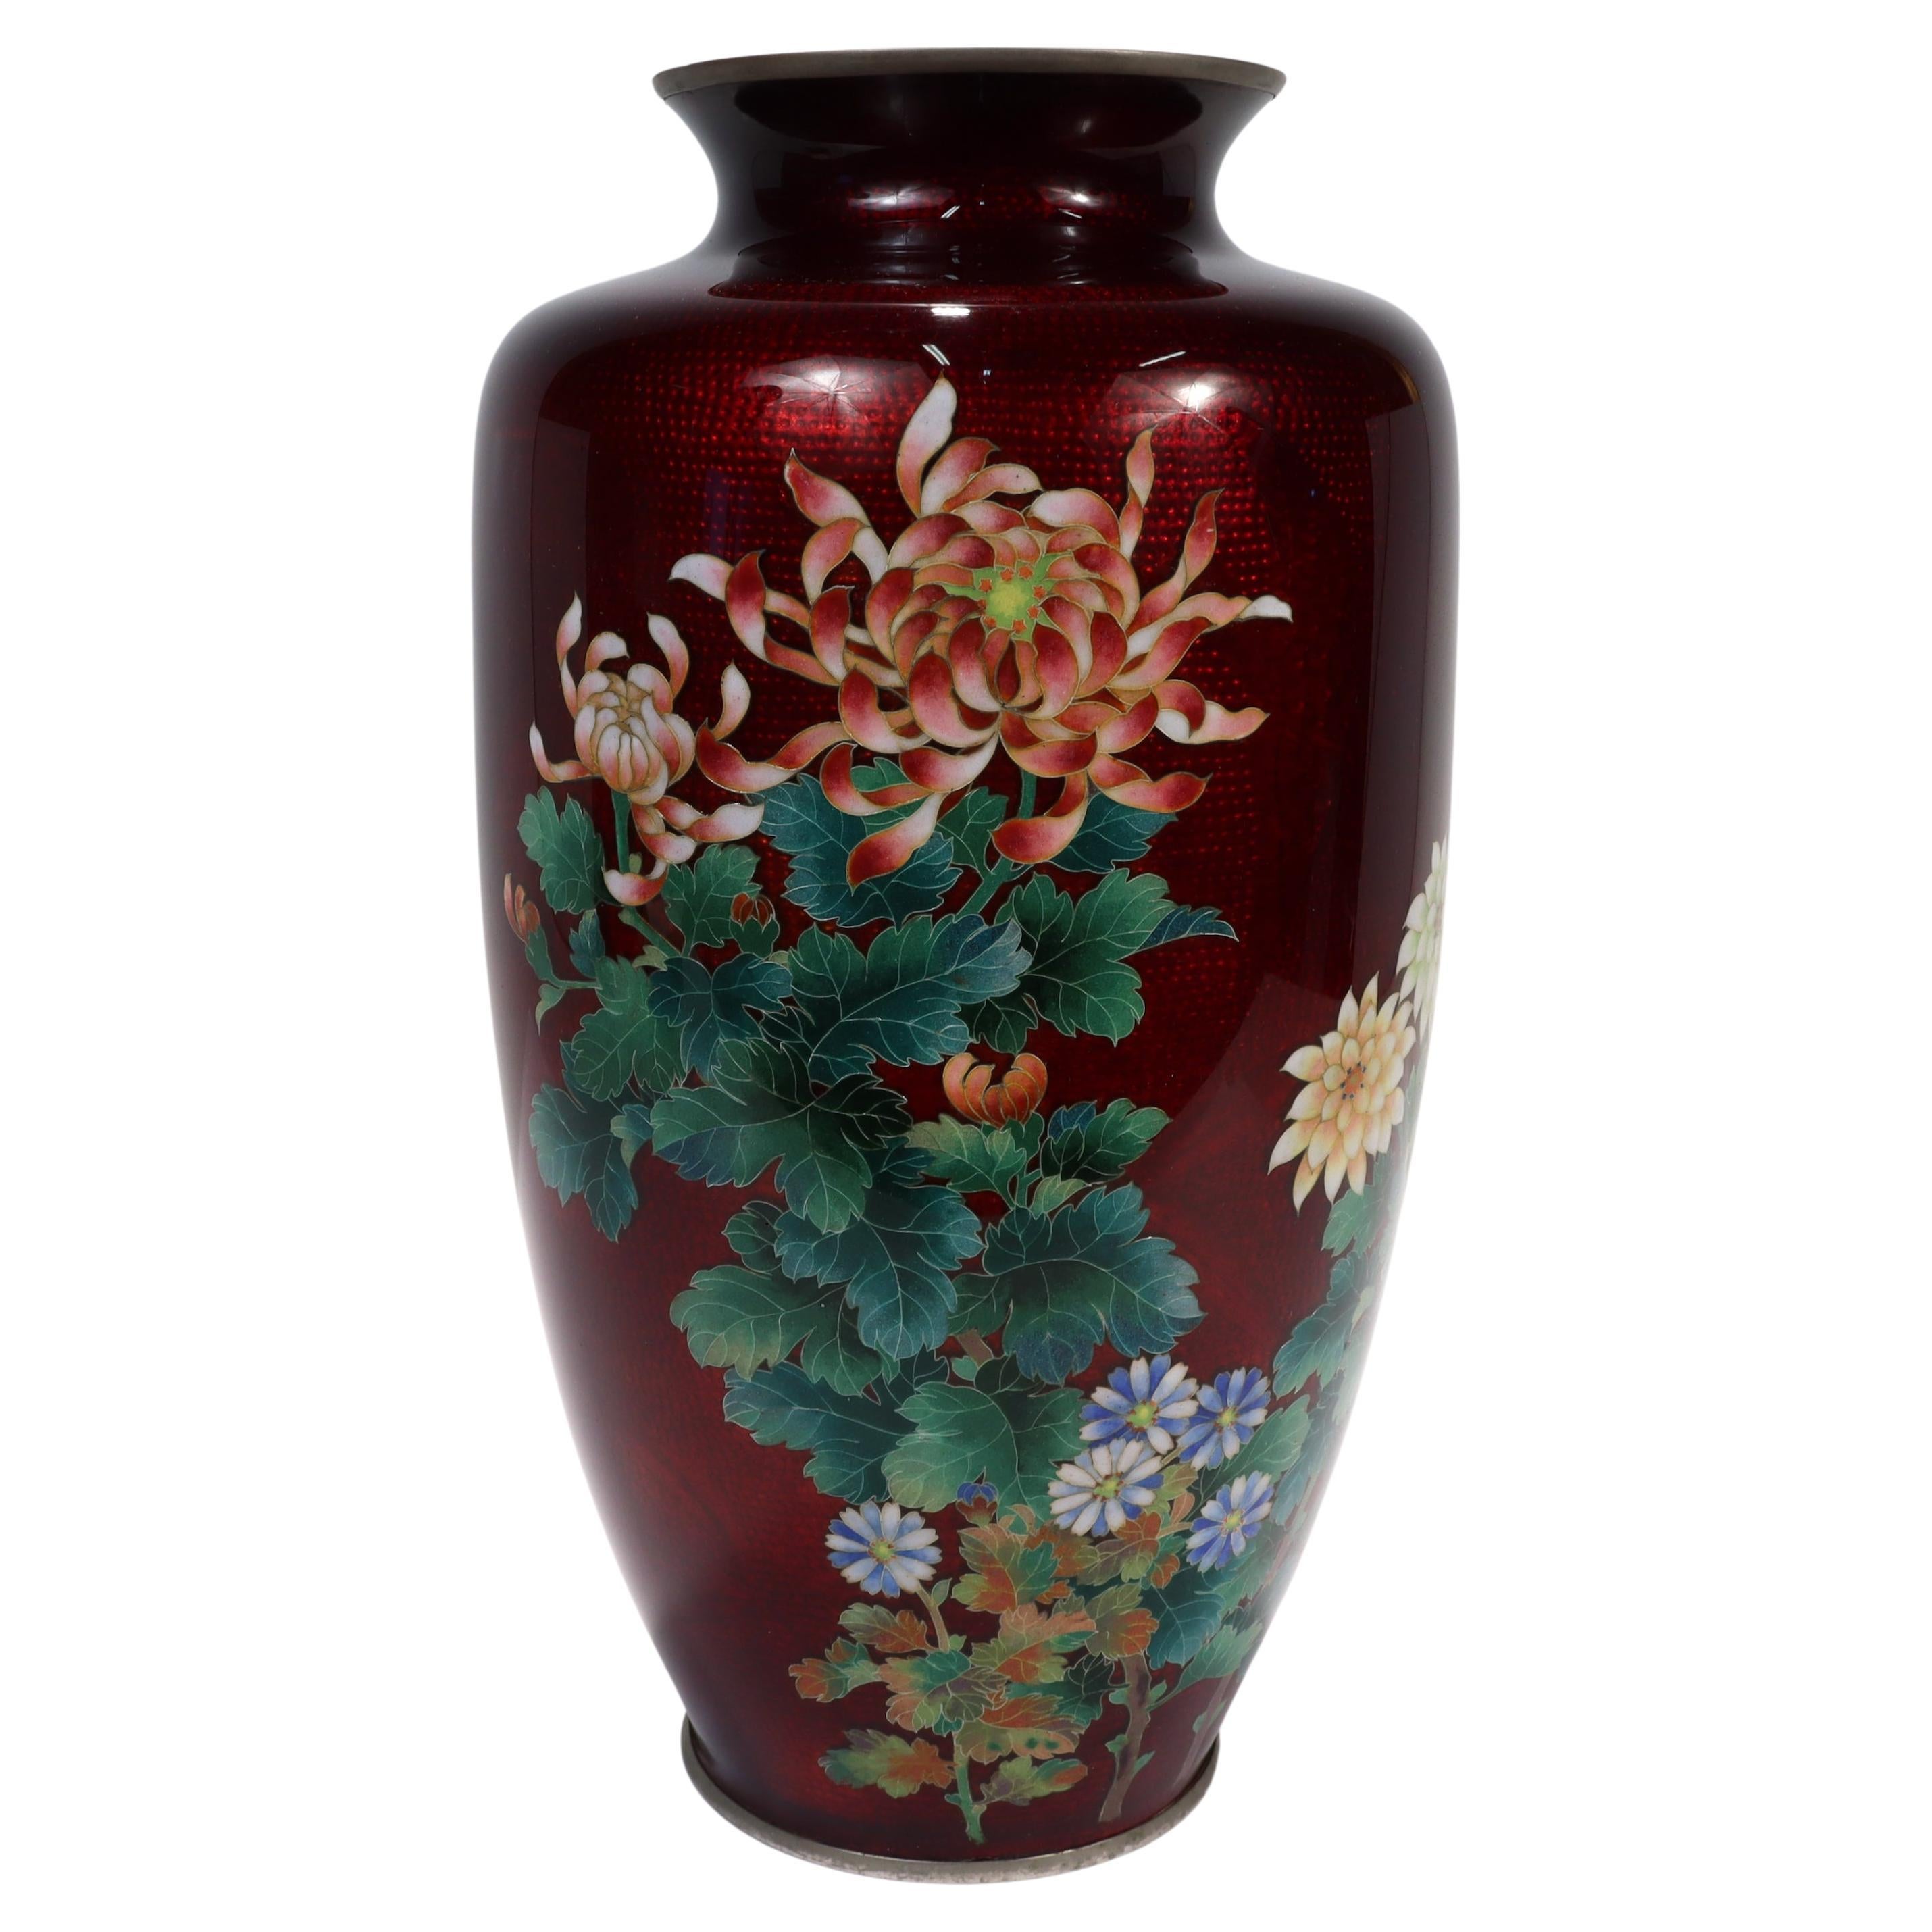 Old or Antique Japanese Cloisonne Enamel Ginbari Vase with Floral Decoration